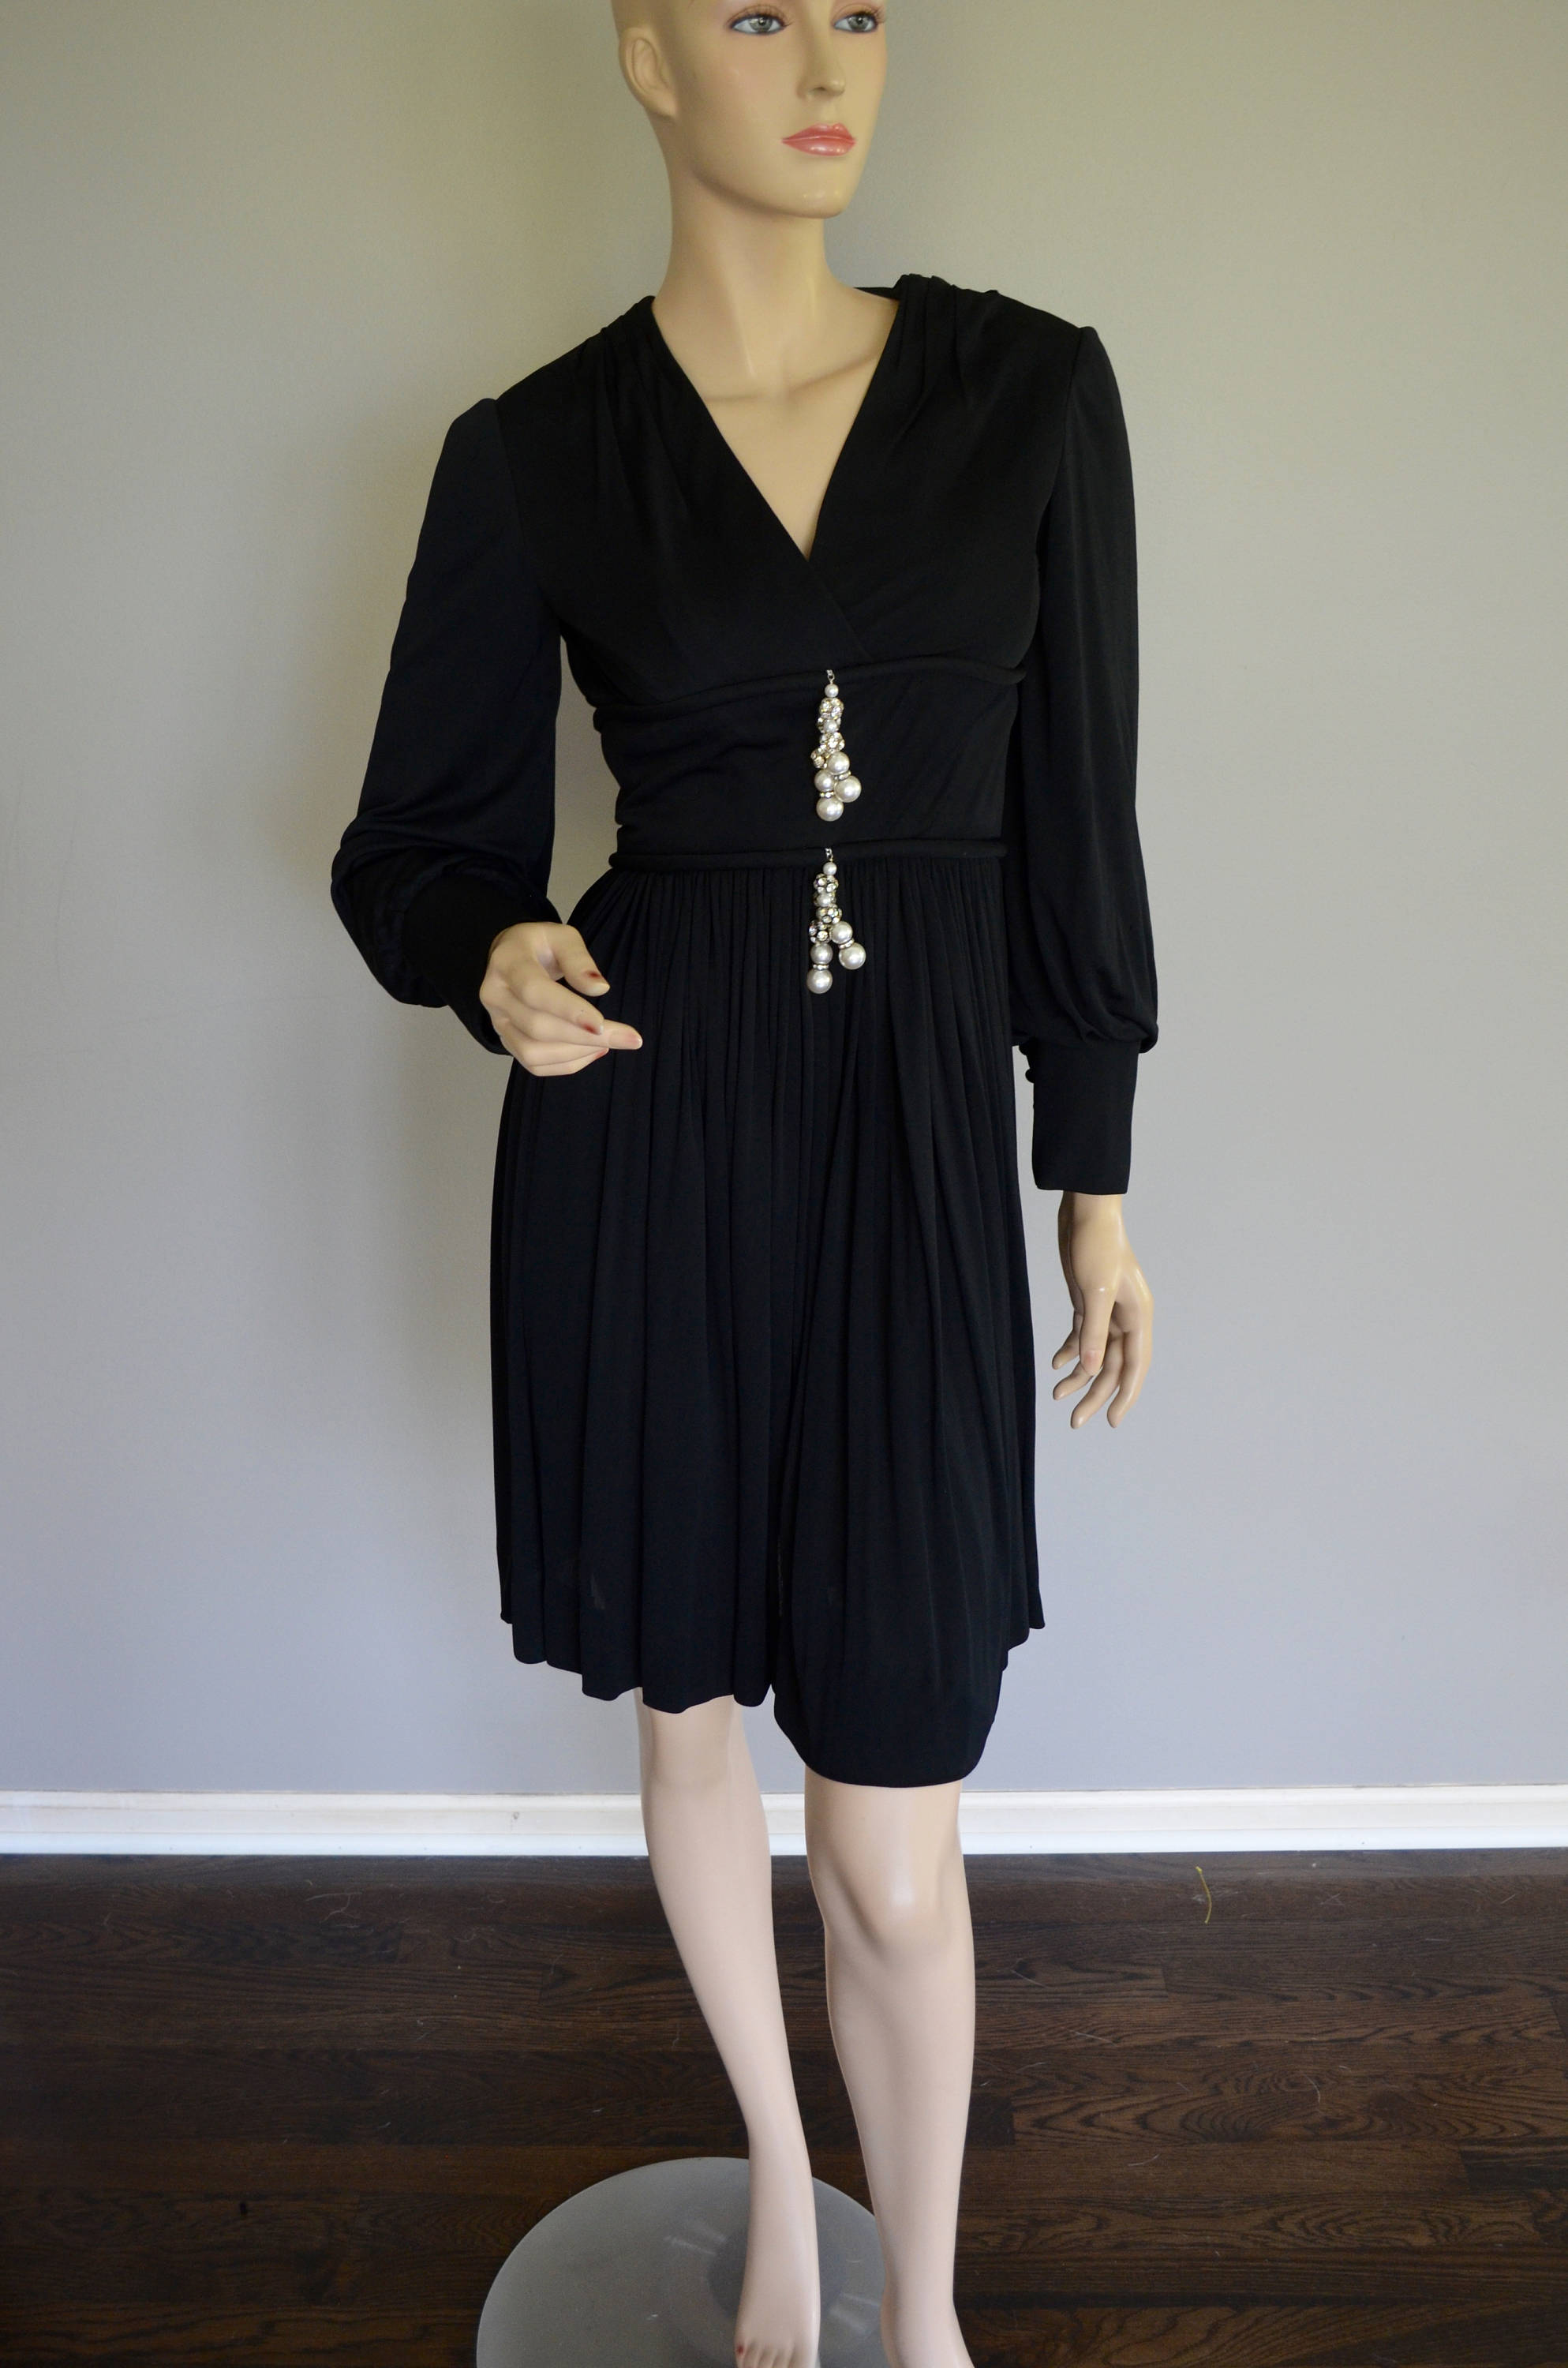 Elinor Simmons for Malcom Starr LBD Black Cocktail Dress | Etsy